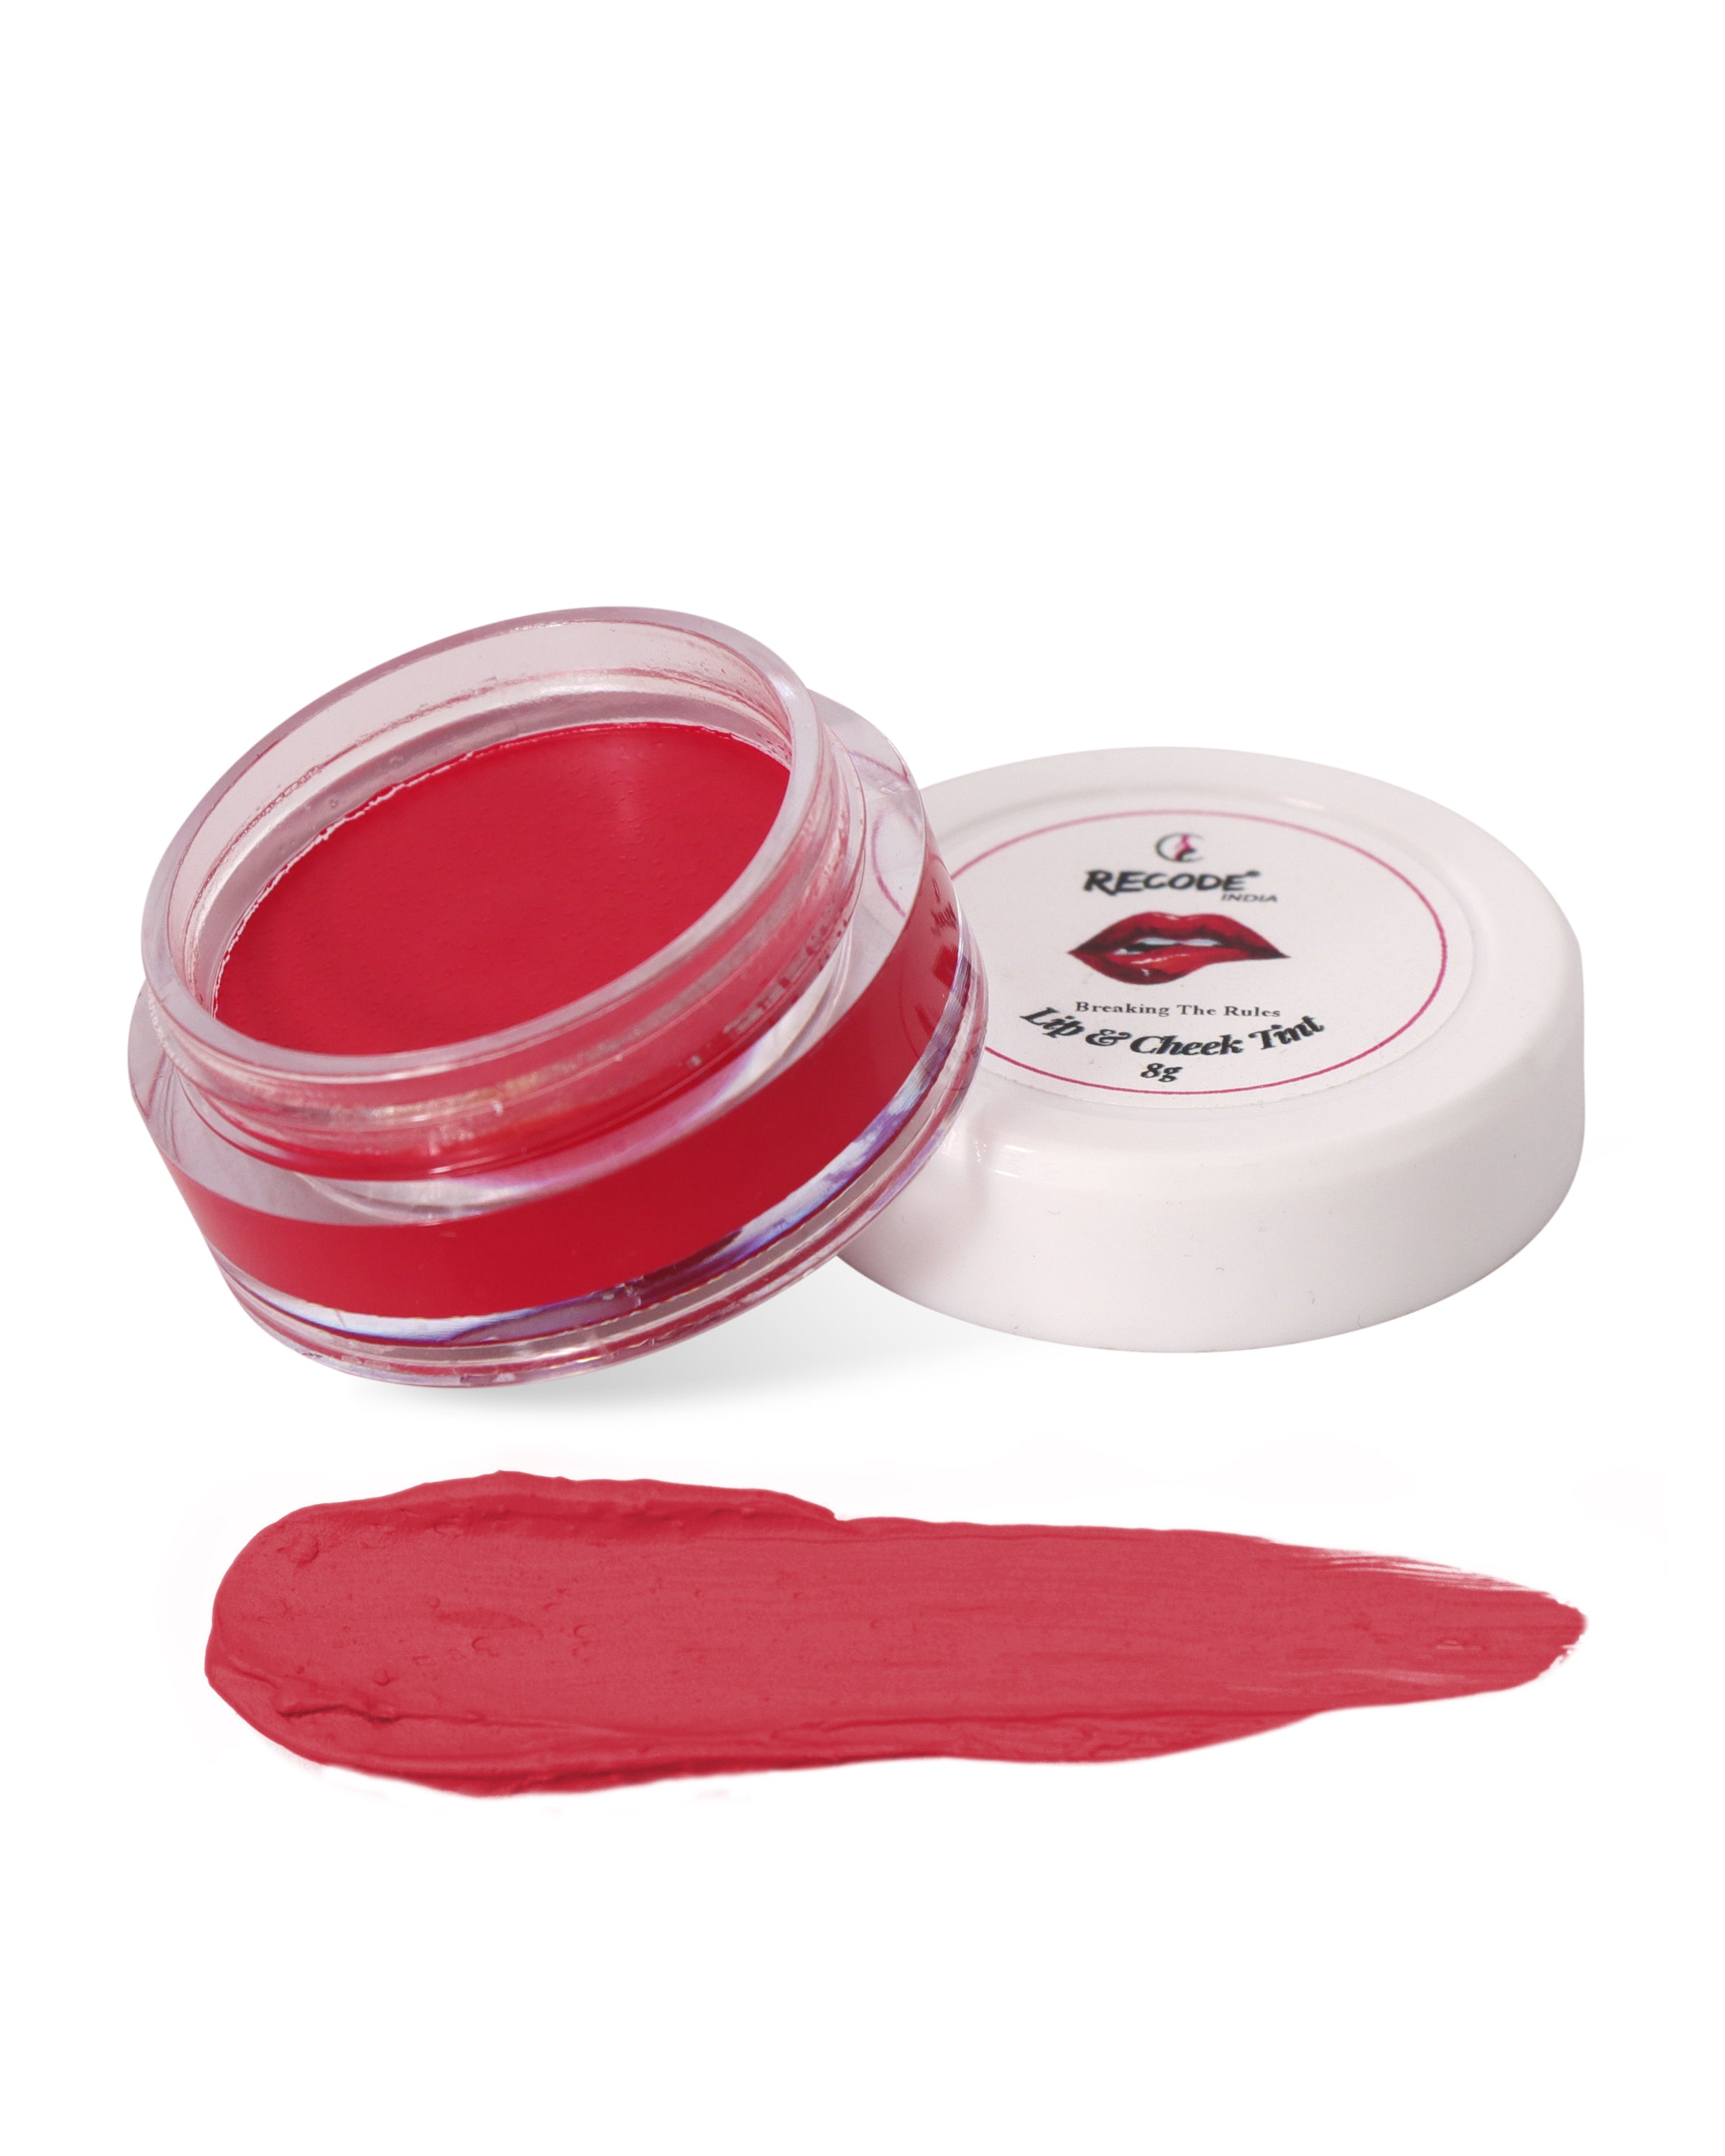 Lip & Cheek Tint - Dark Red Shade - 8 gms - Recode Studios